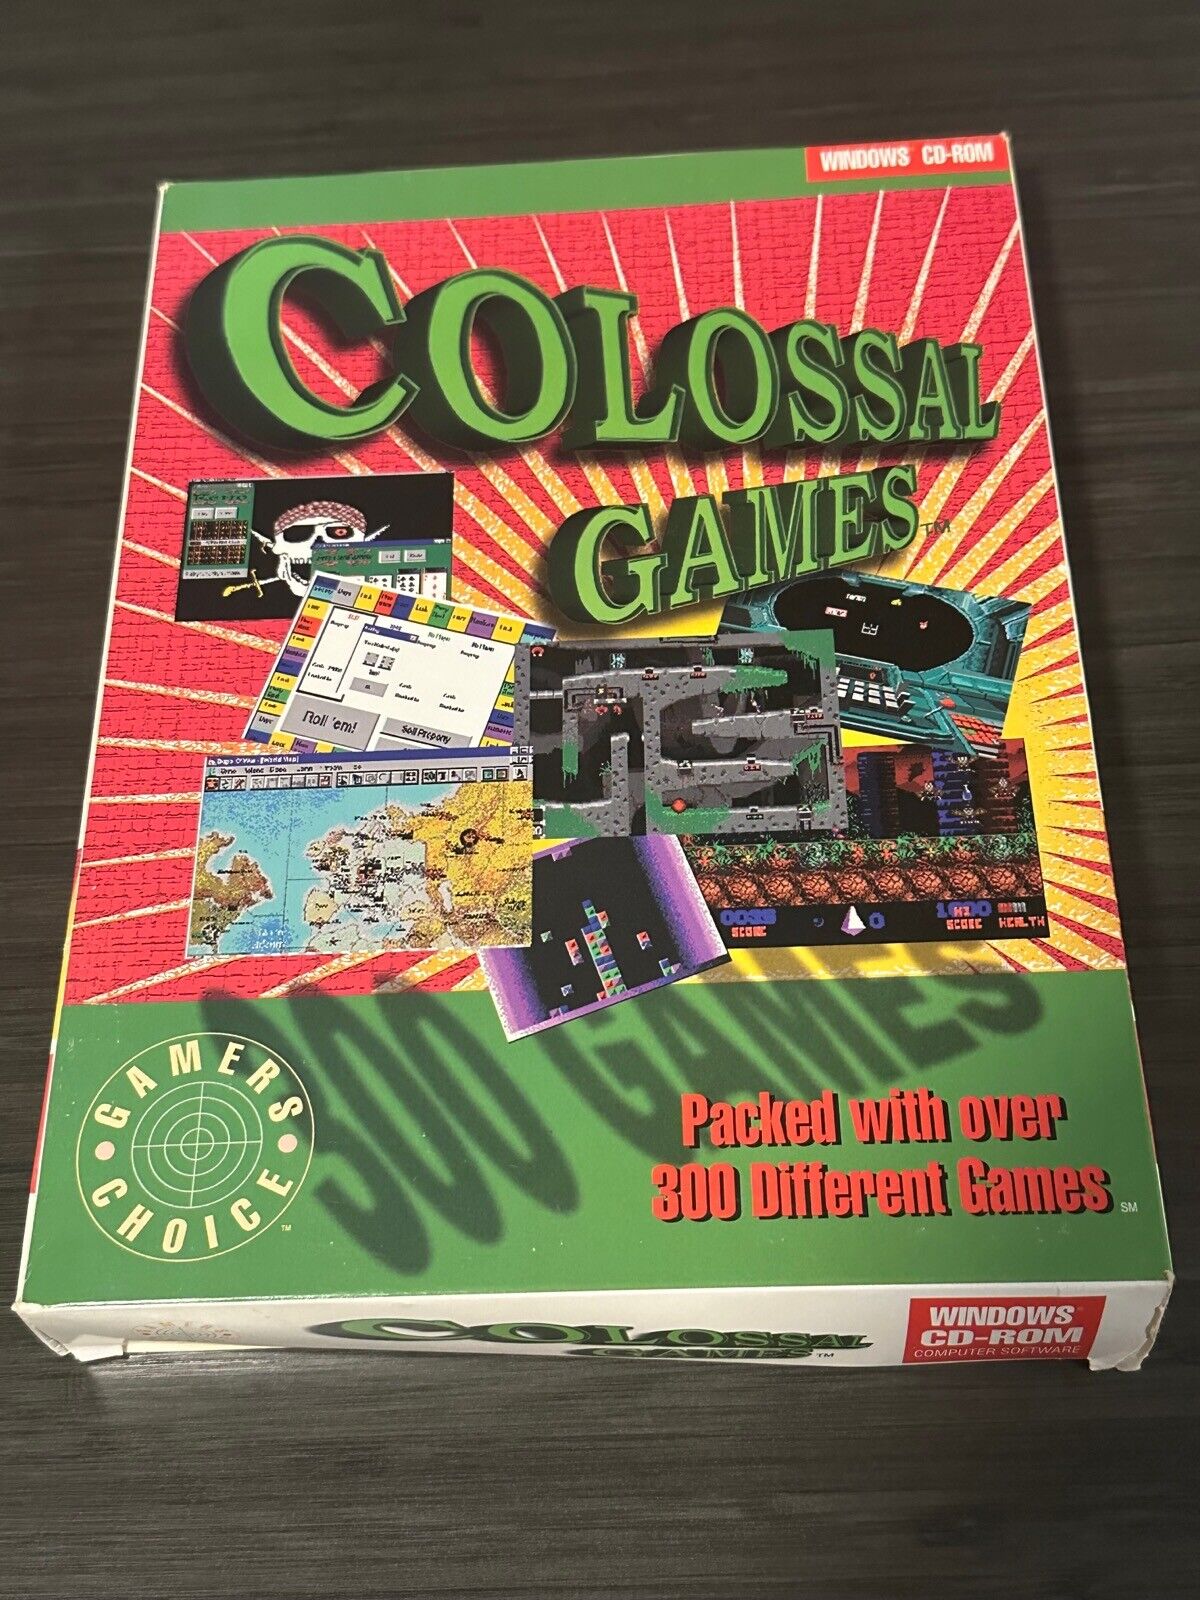 Colossal Games IBM PC Windows 95 3.1 shareware software big box 1997